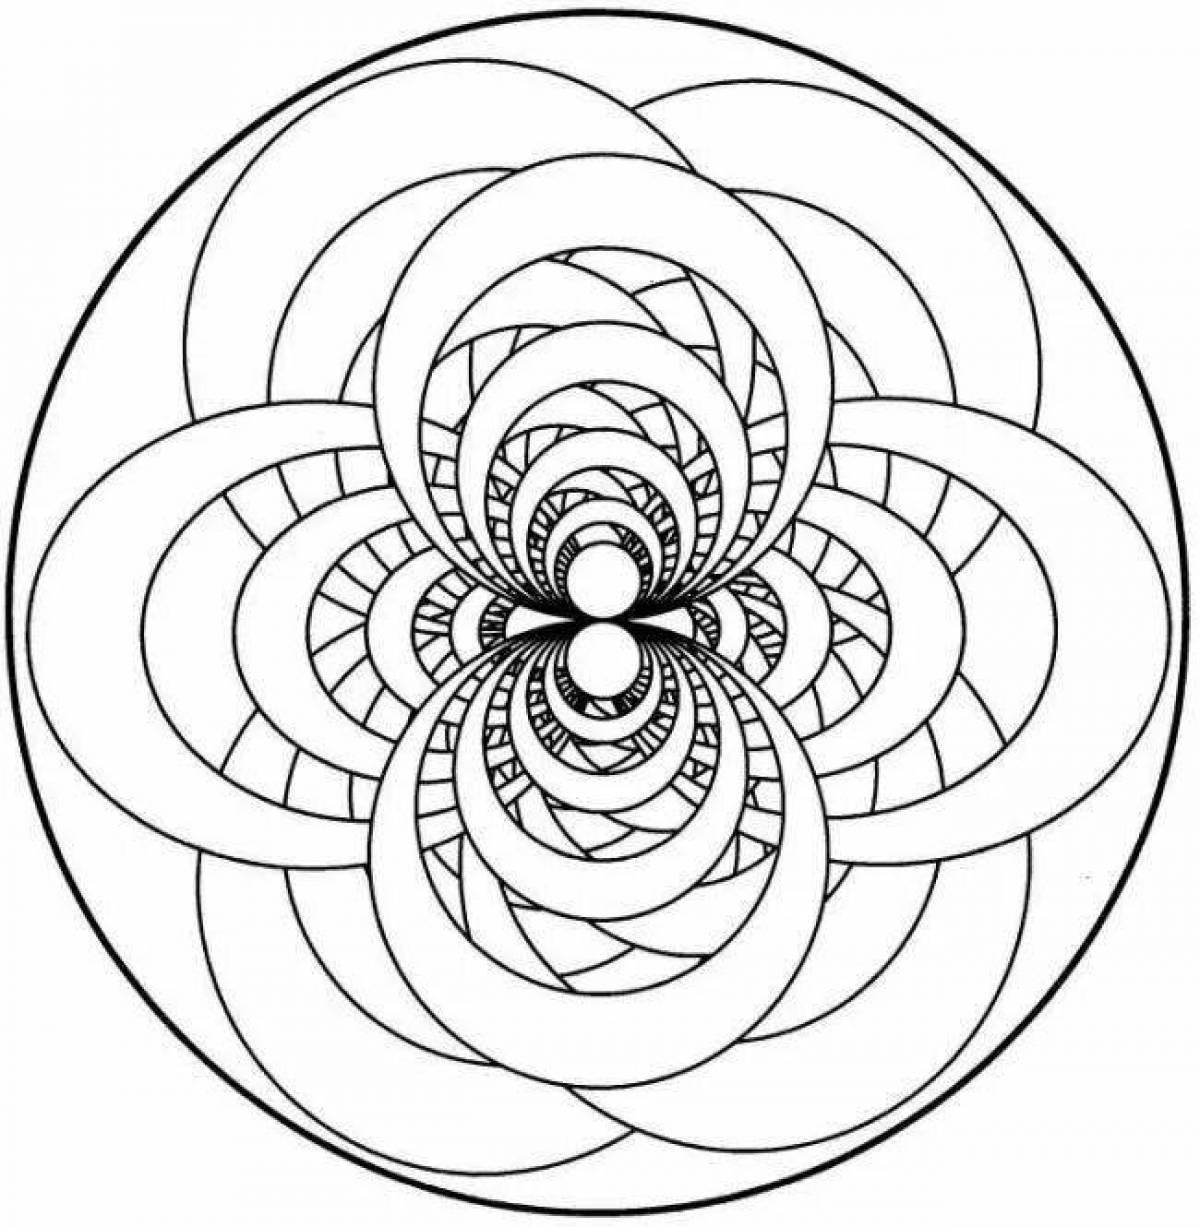 Fine coloring hidden spiral pattern